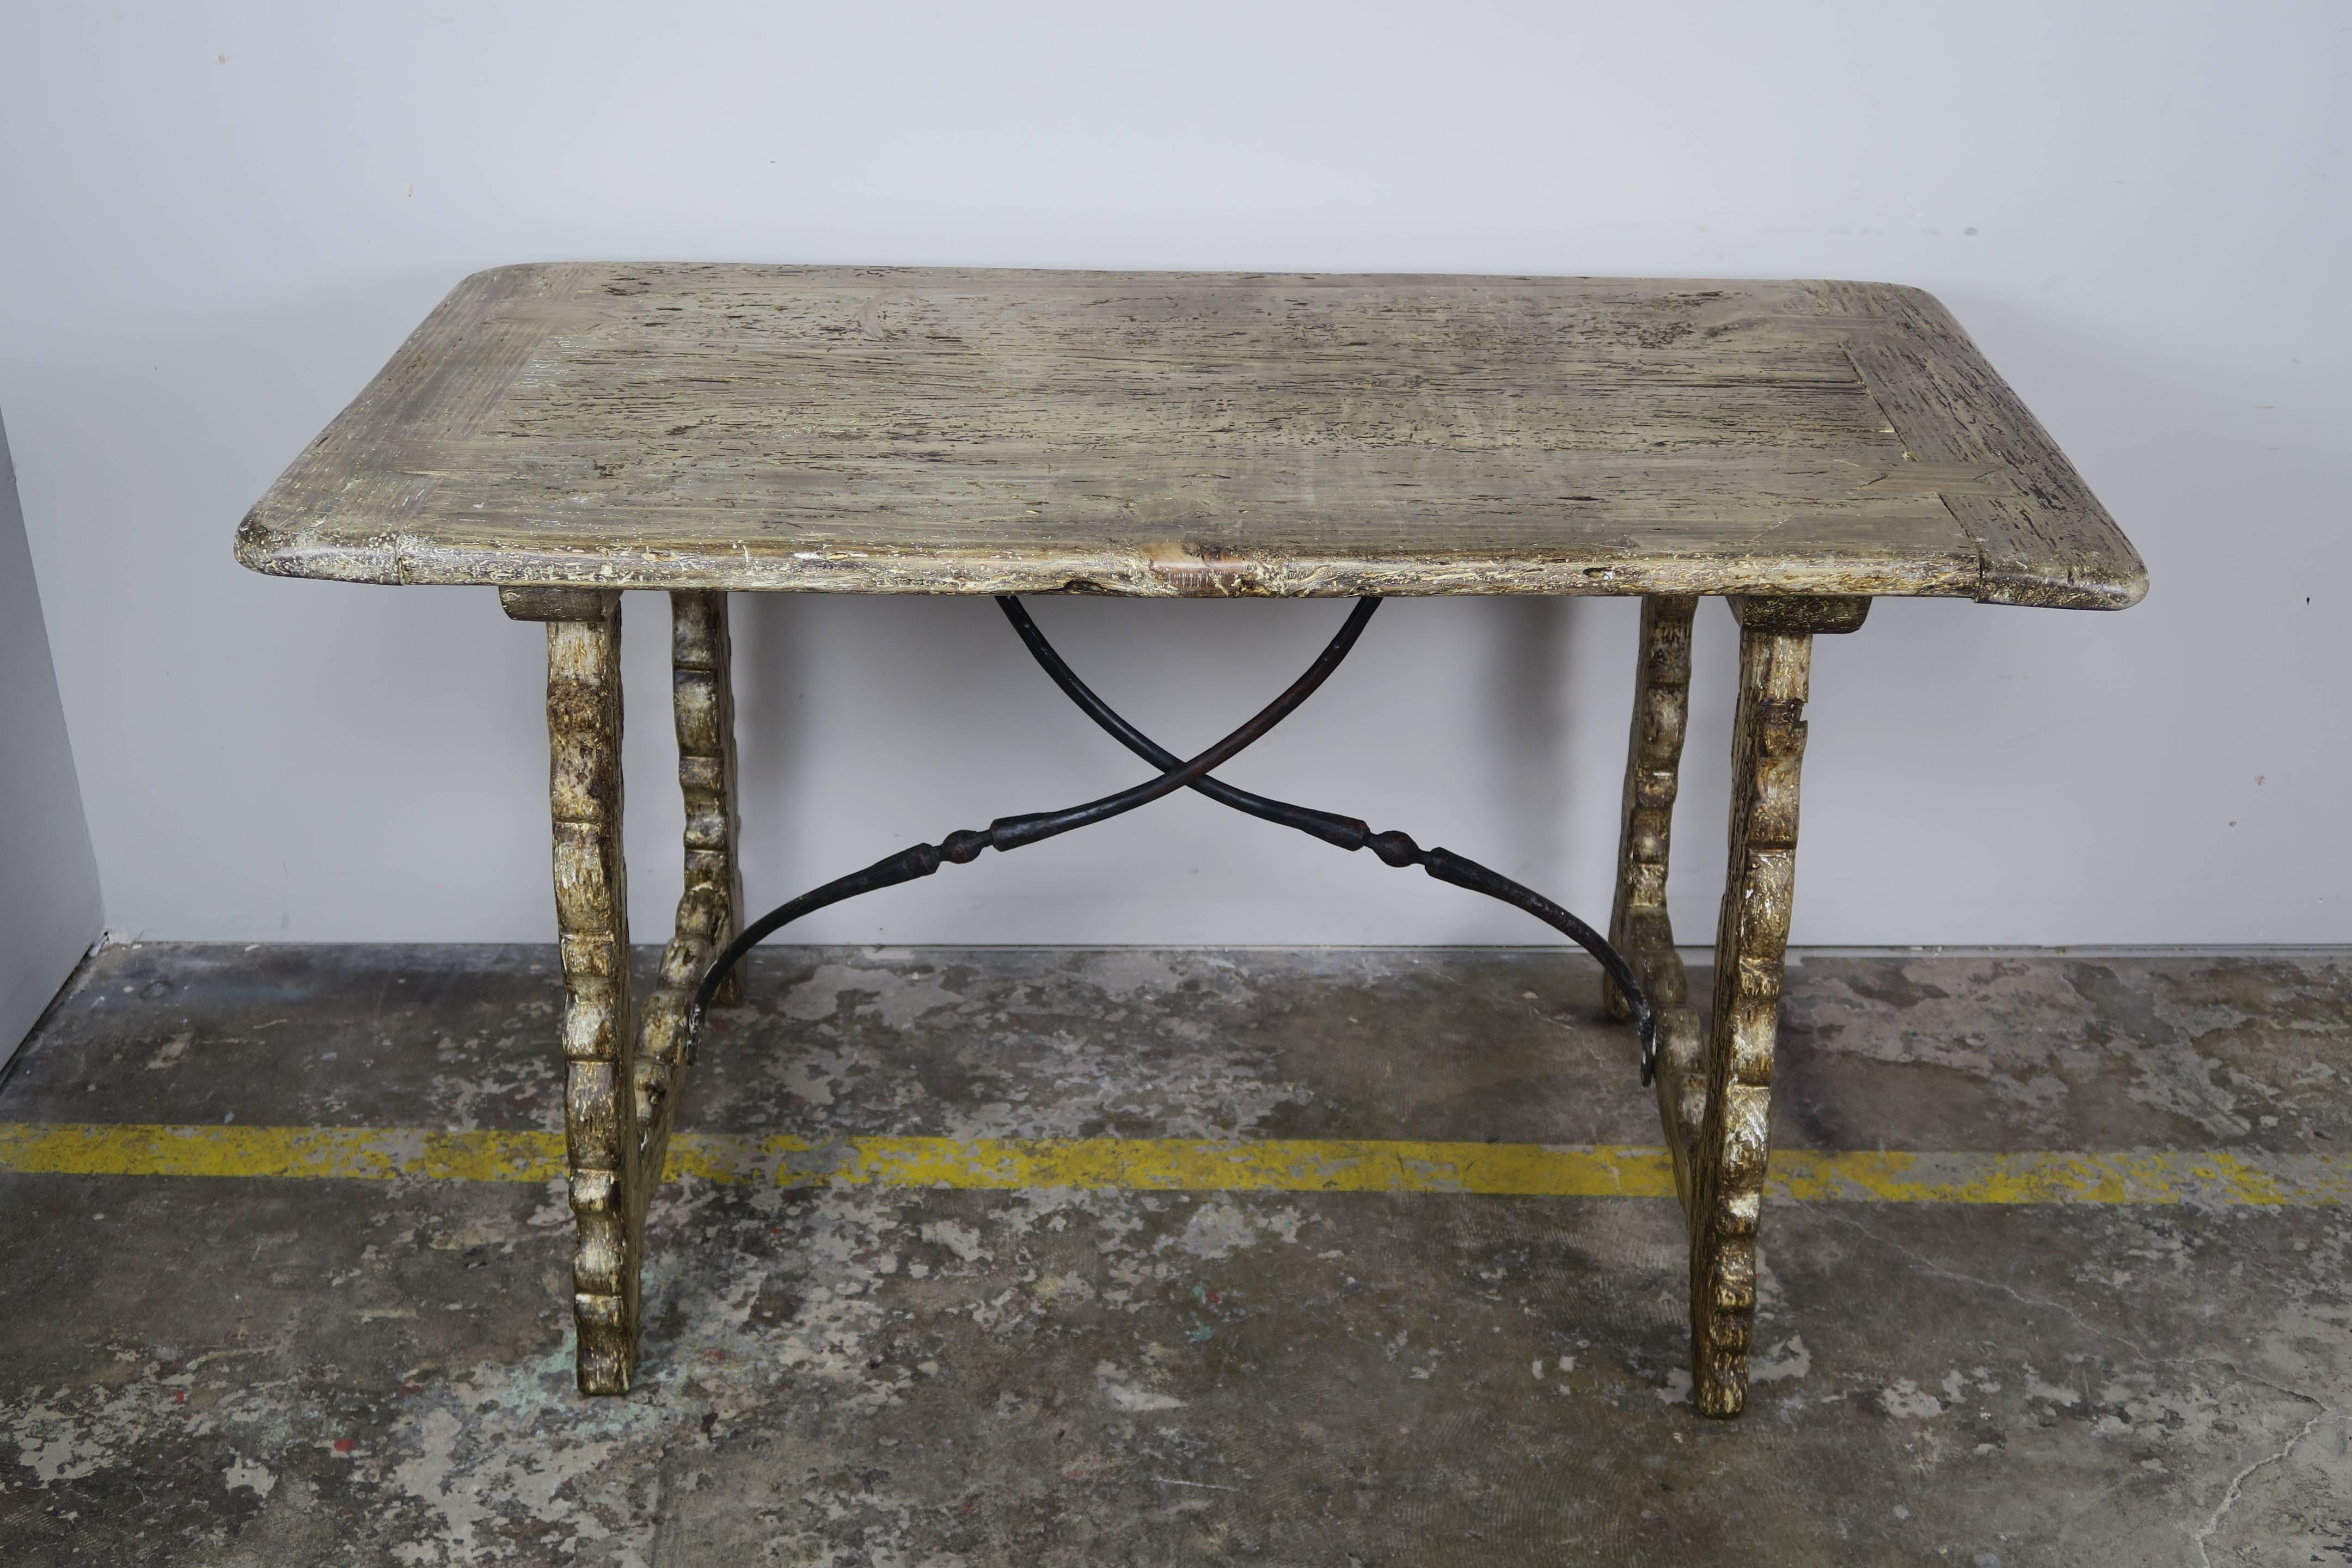 19th century Spanish table with iron stretcher. Beautiful worn finish.